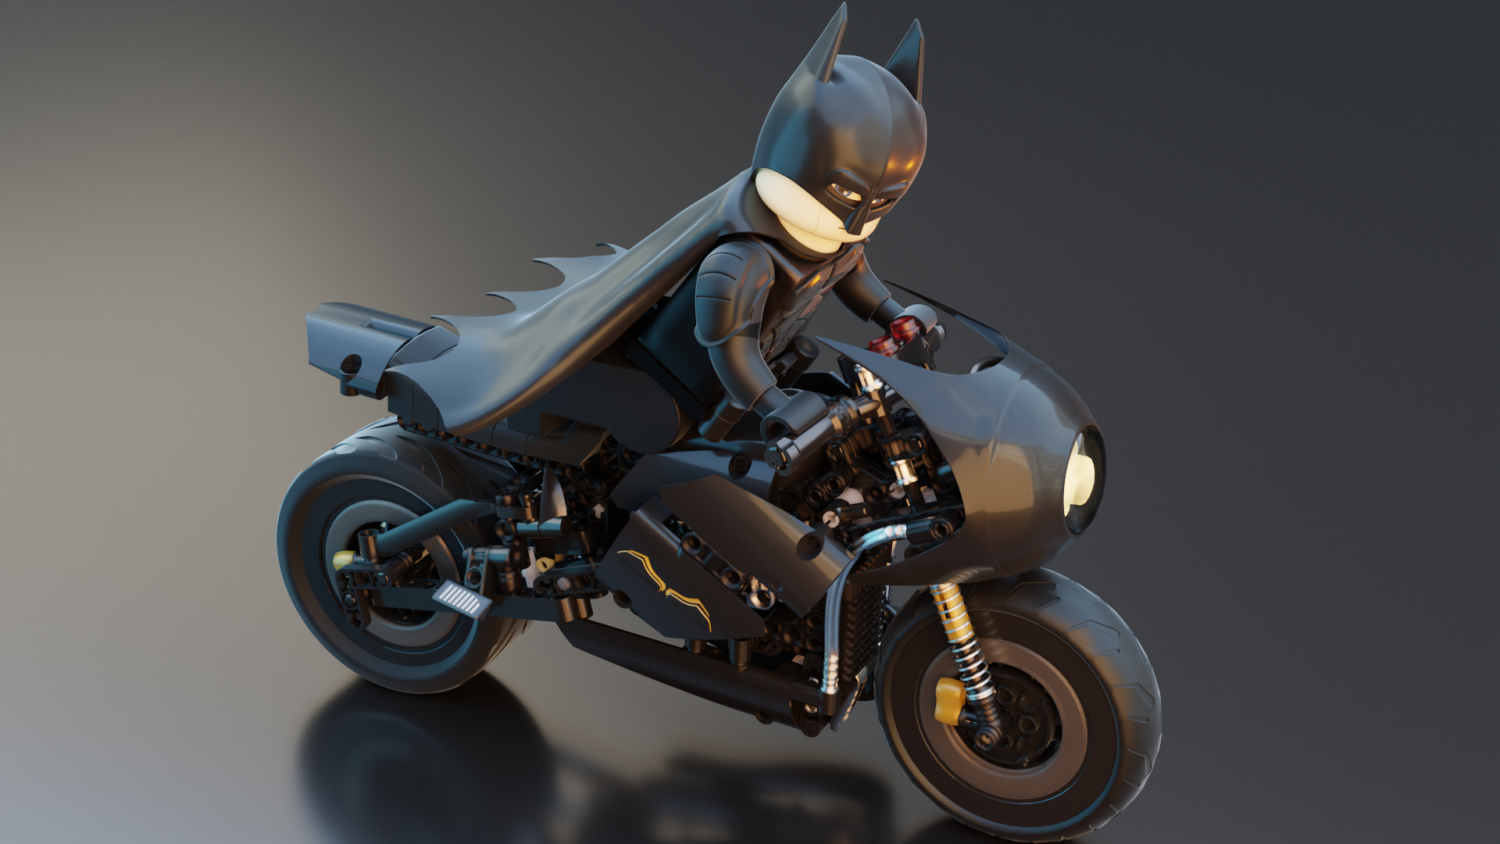 Imprimer en 3D Lego - Moto Batman • Fabriqué avec une imprimante 3D I3  MK3S・Cults